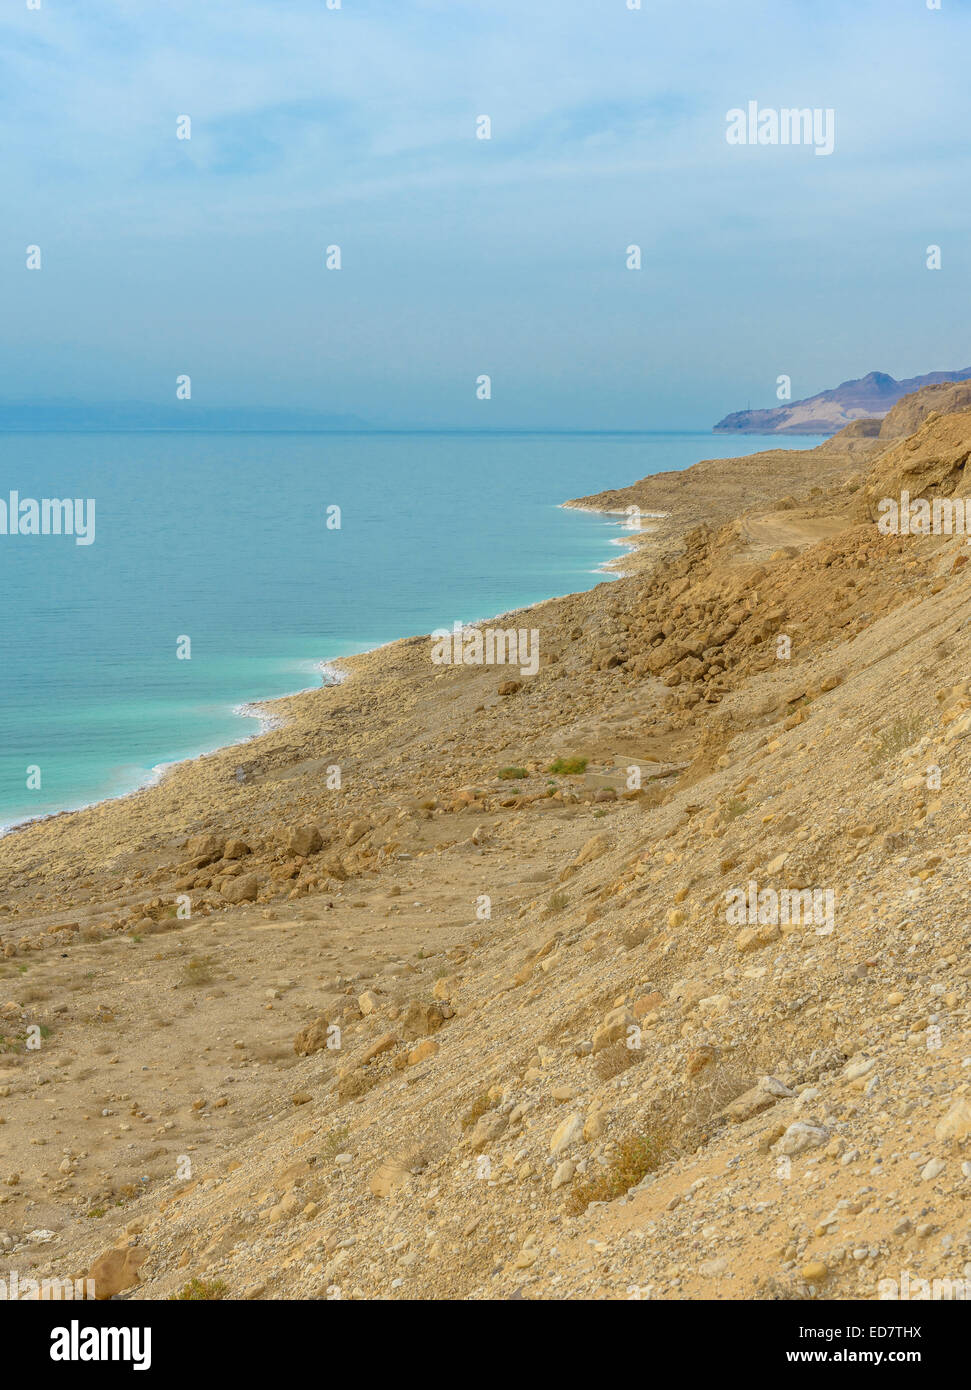 View of Dead Sea coastline in Jordan. Stock Photo